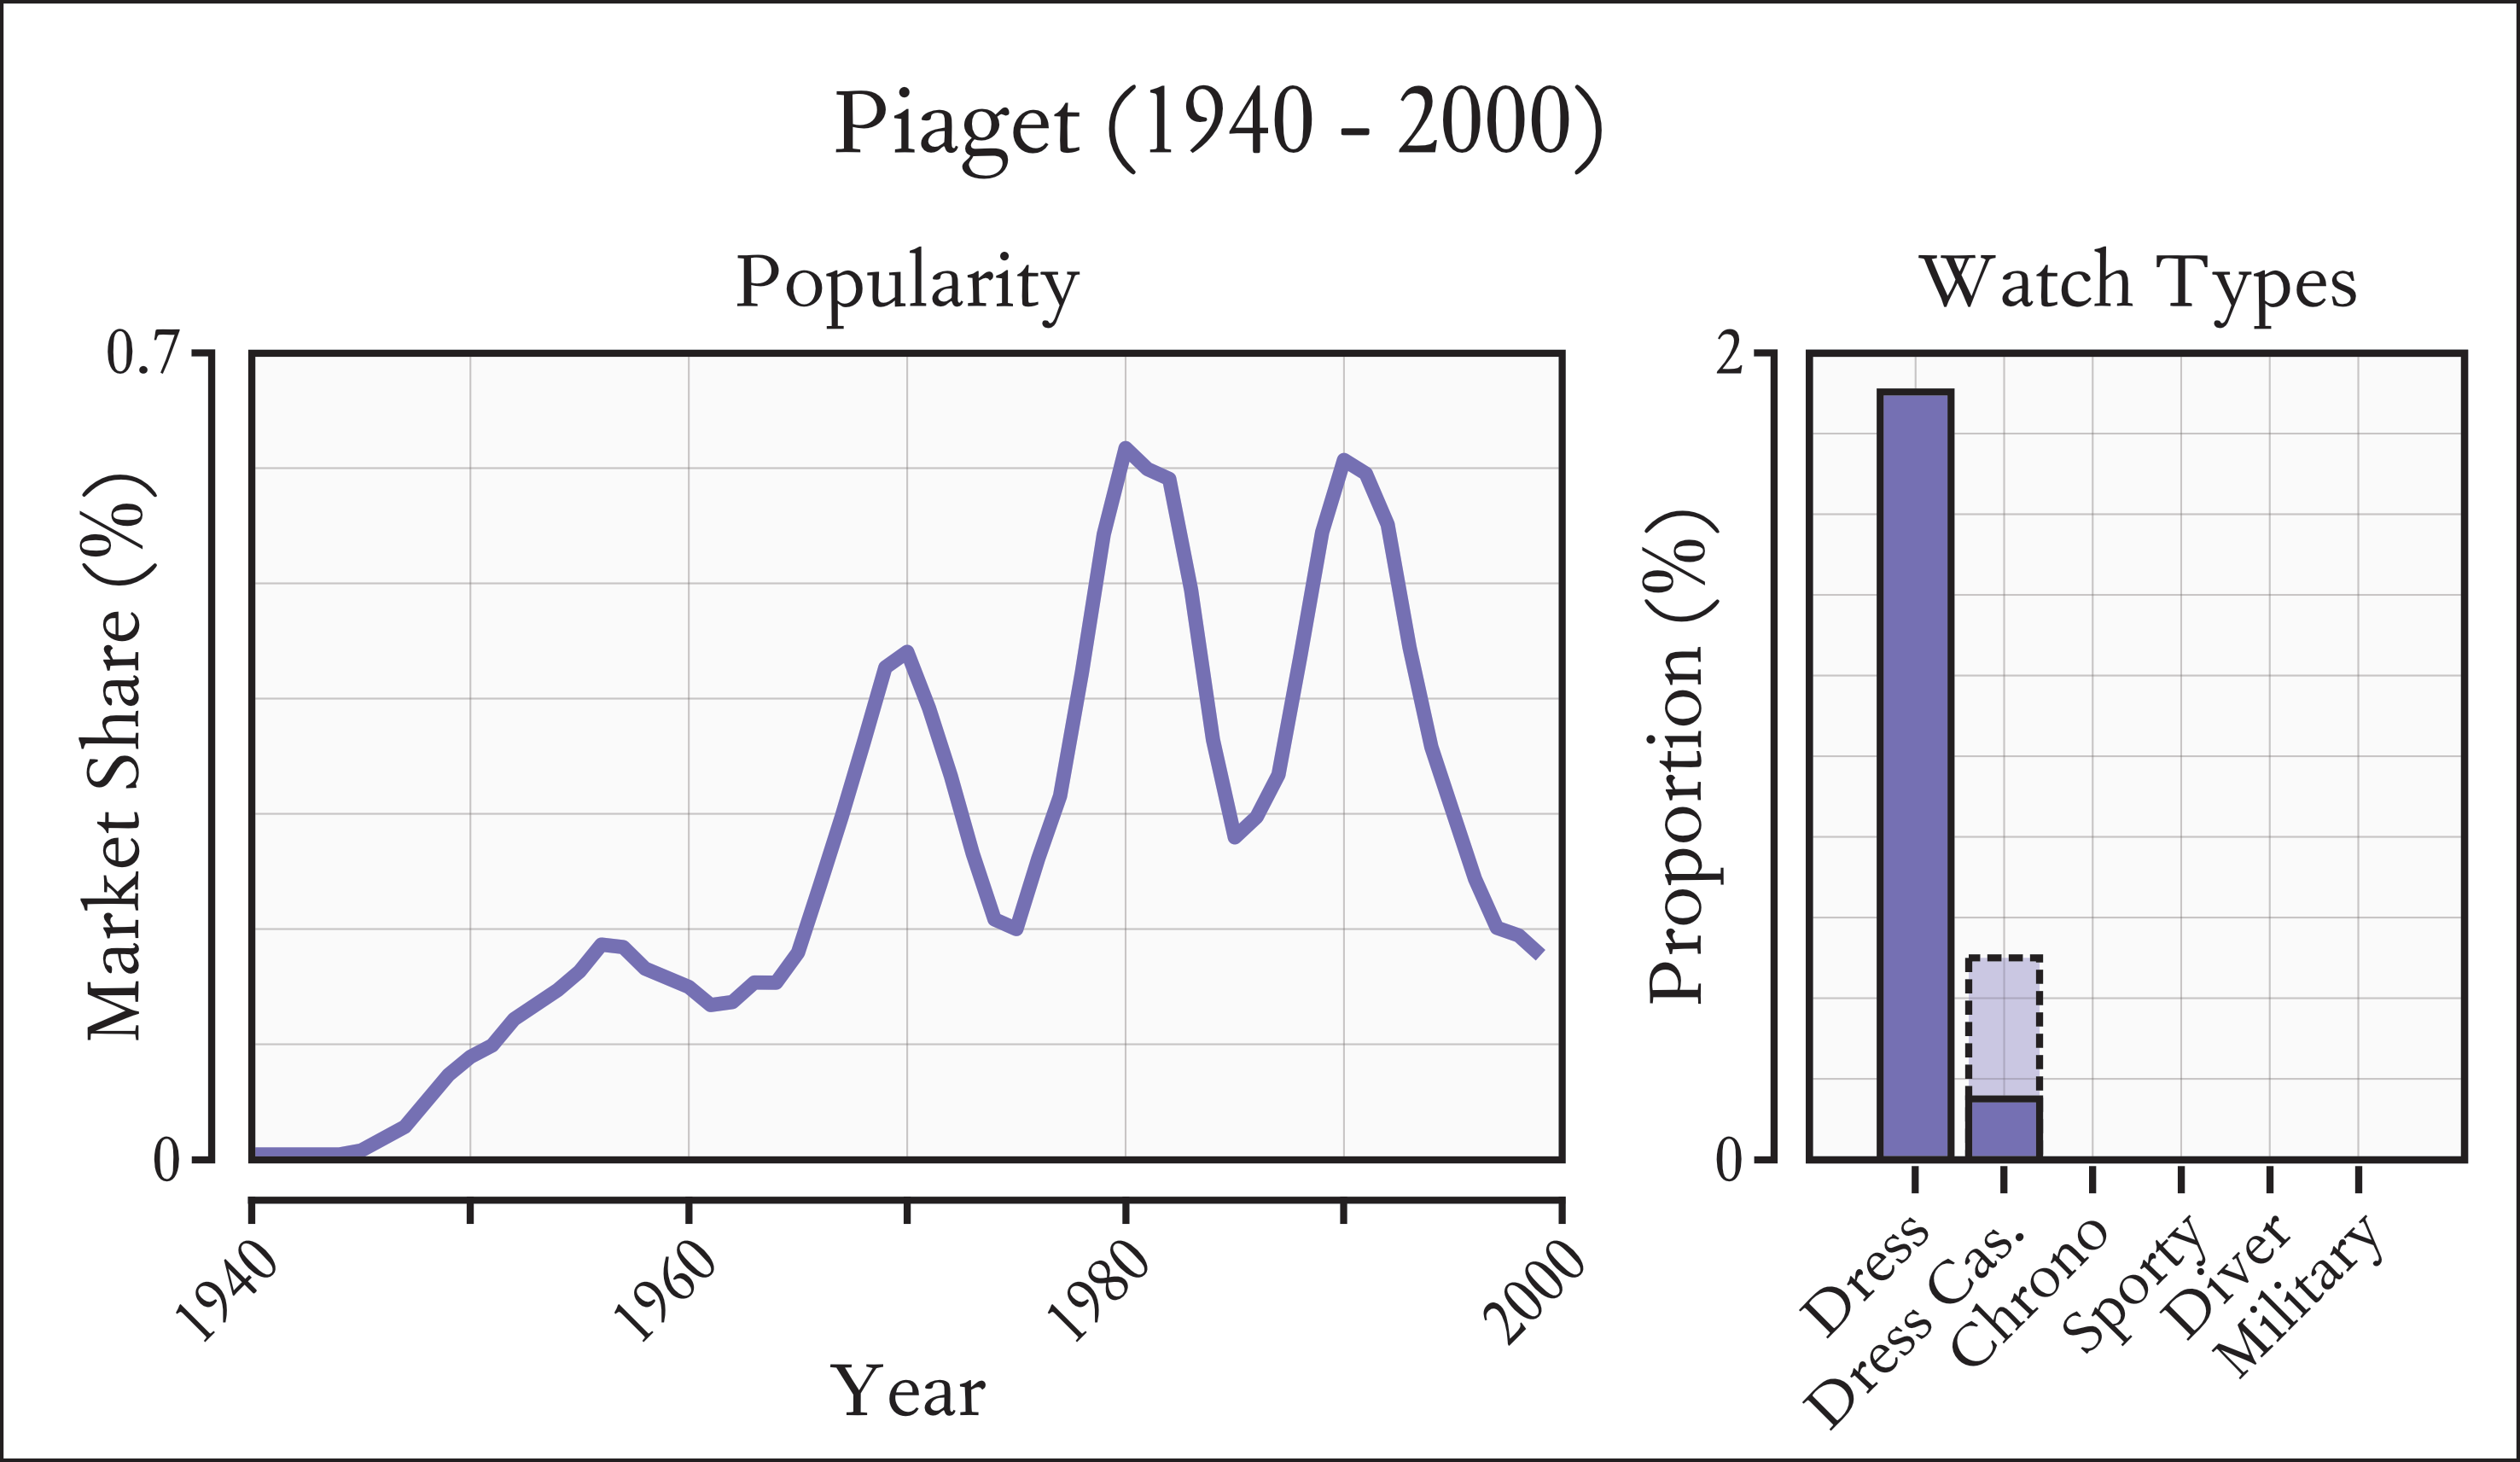 Distribution of Piaget popularity between 1940-2000